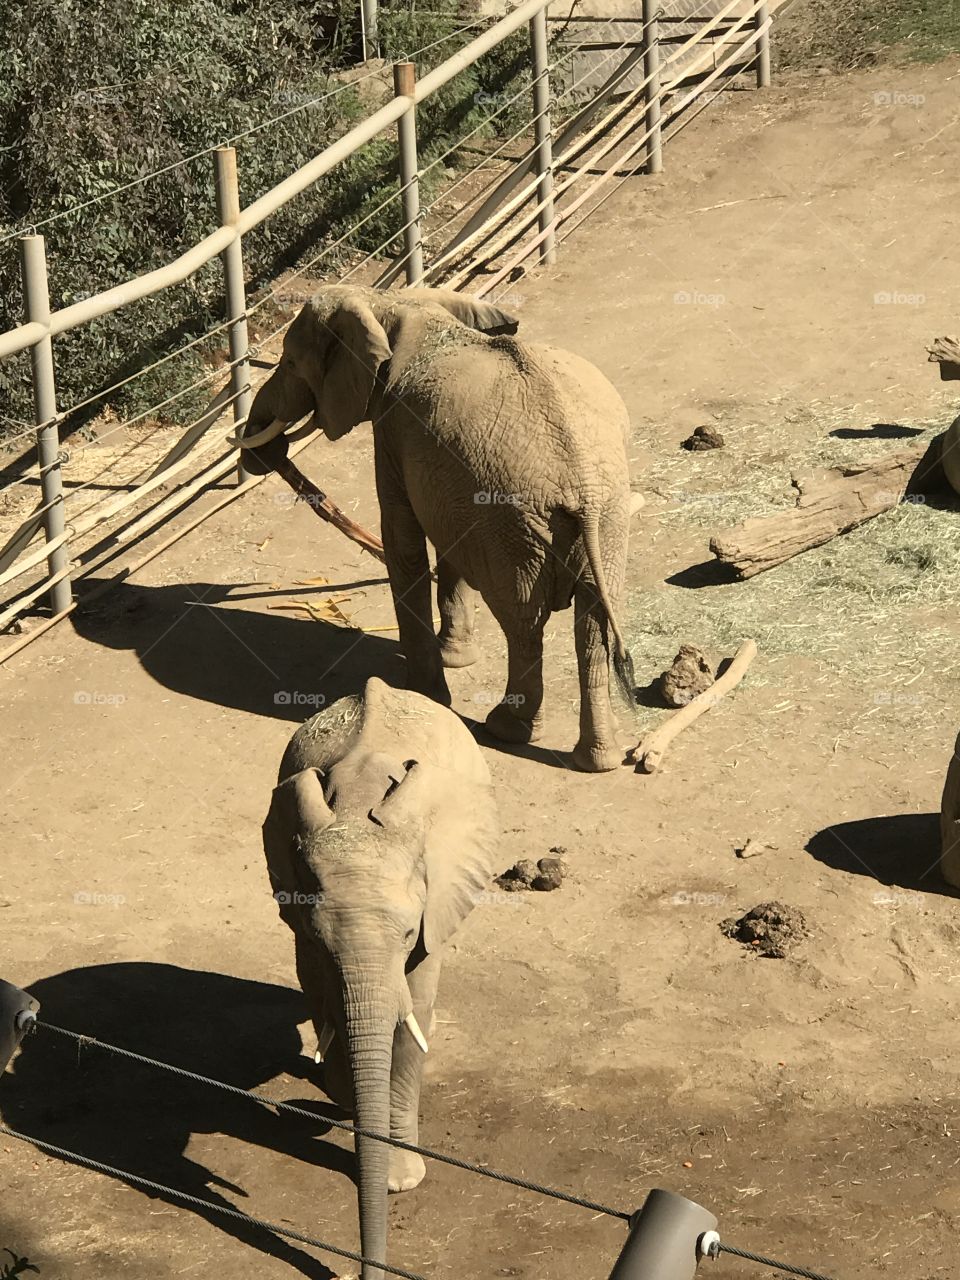 Elephants at the San Diego Zoo 2